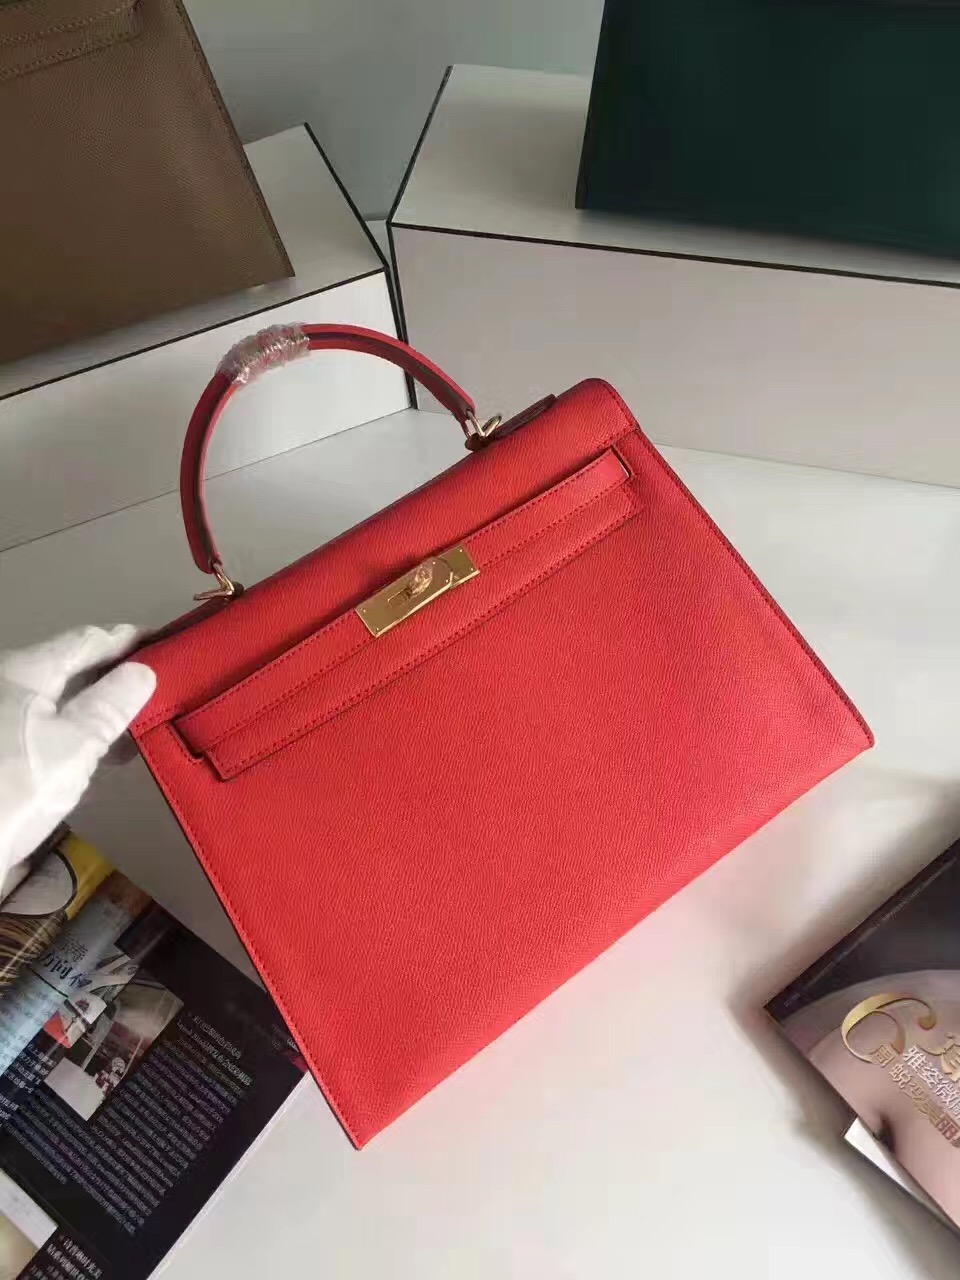 Hermes Epsom 32cm leather Kelly top red handbags